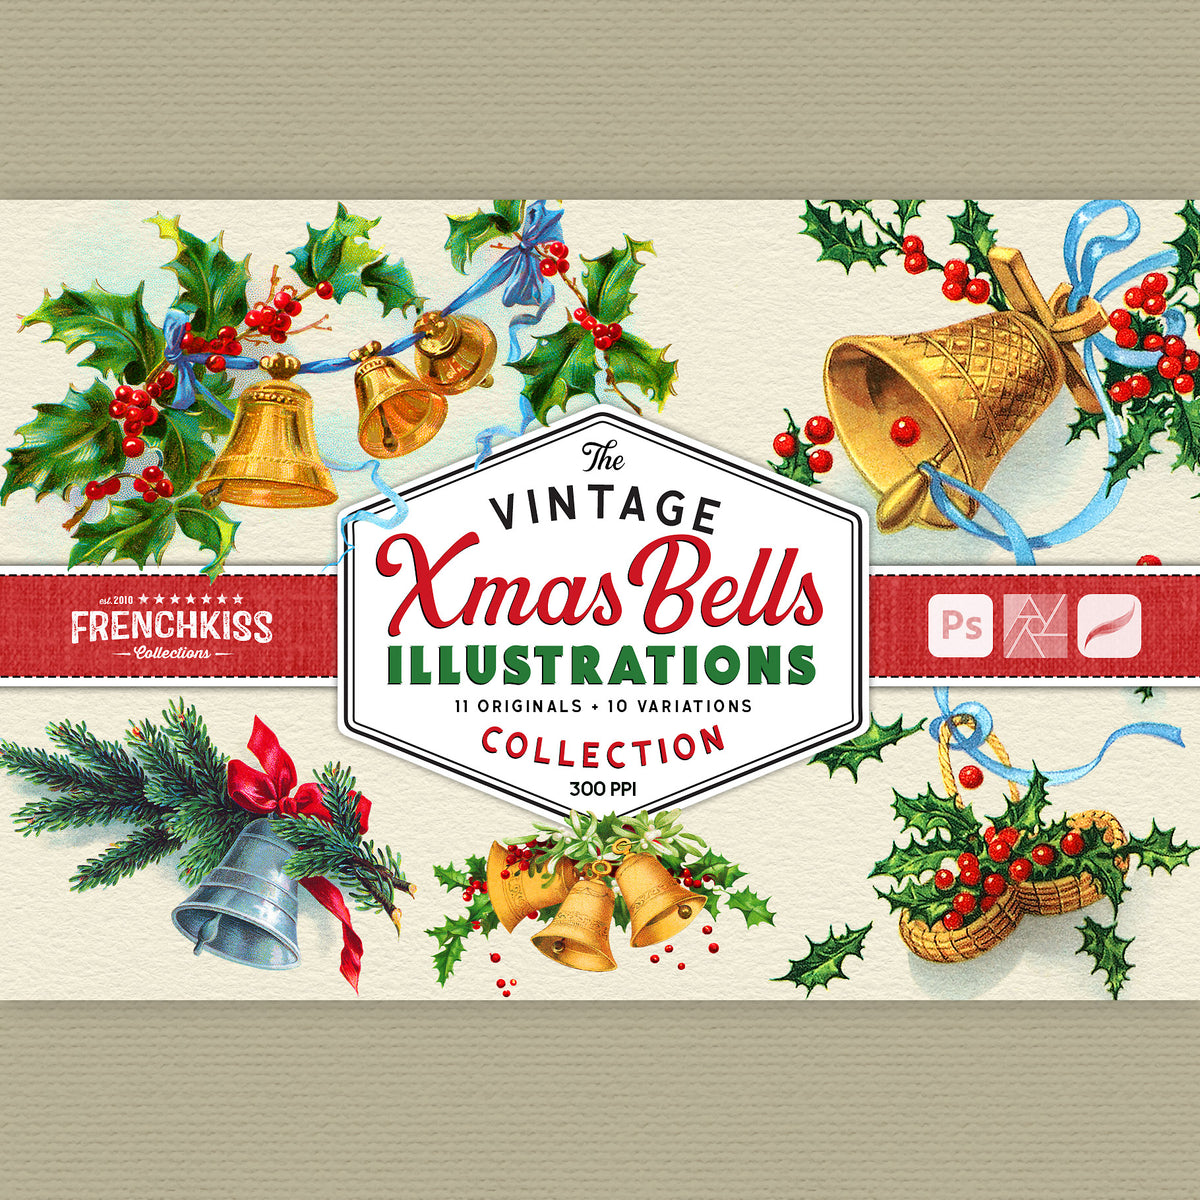 The Vintage Christmas Bells vintage illustrations digital graphic collection.